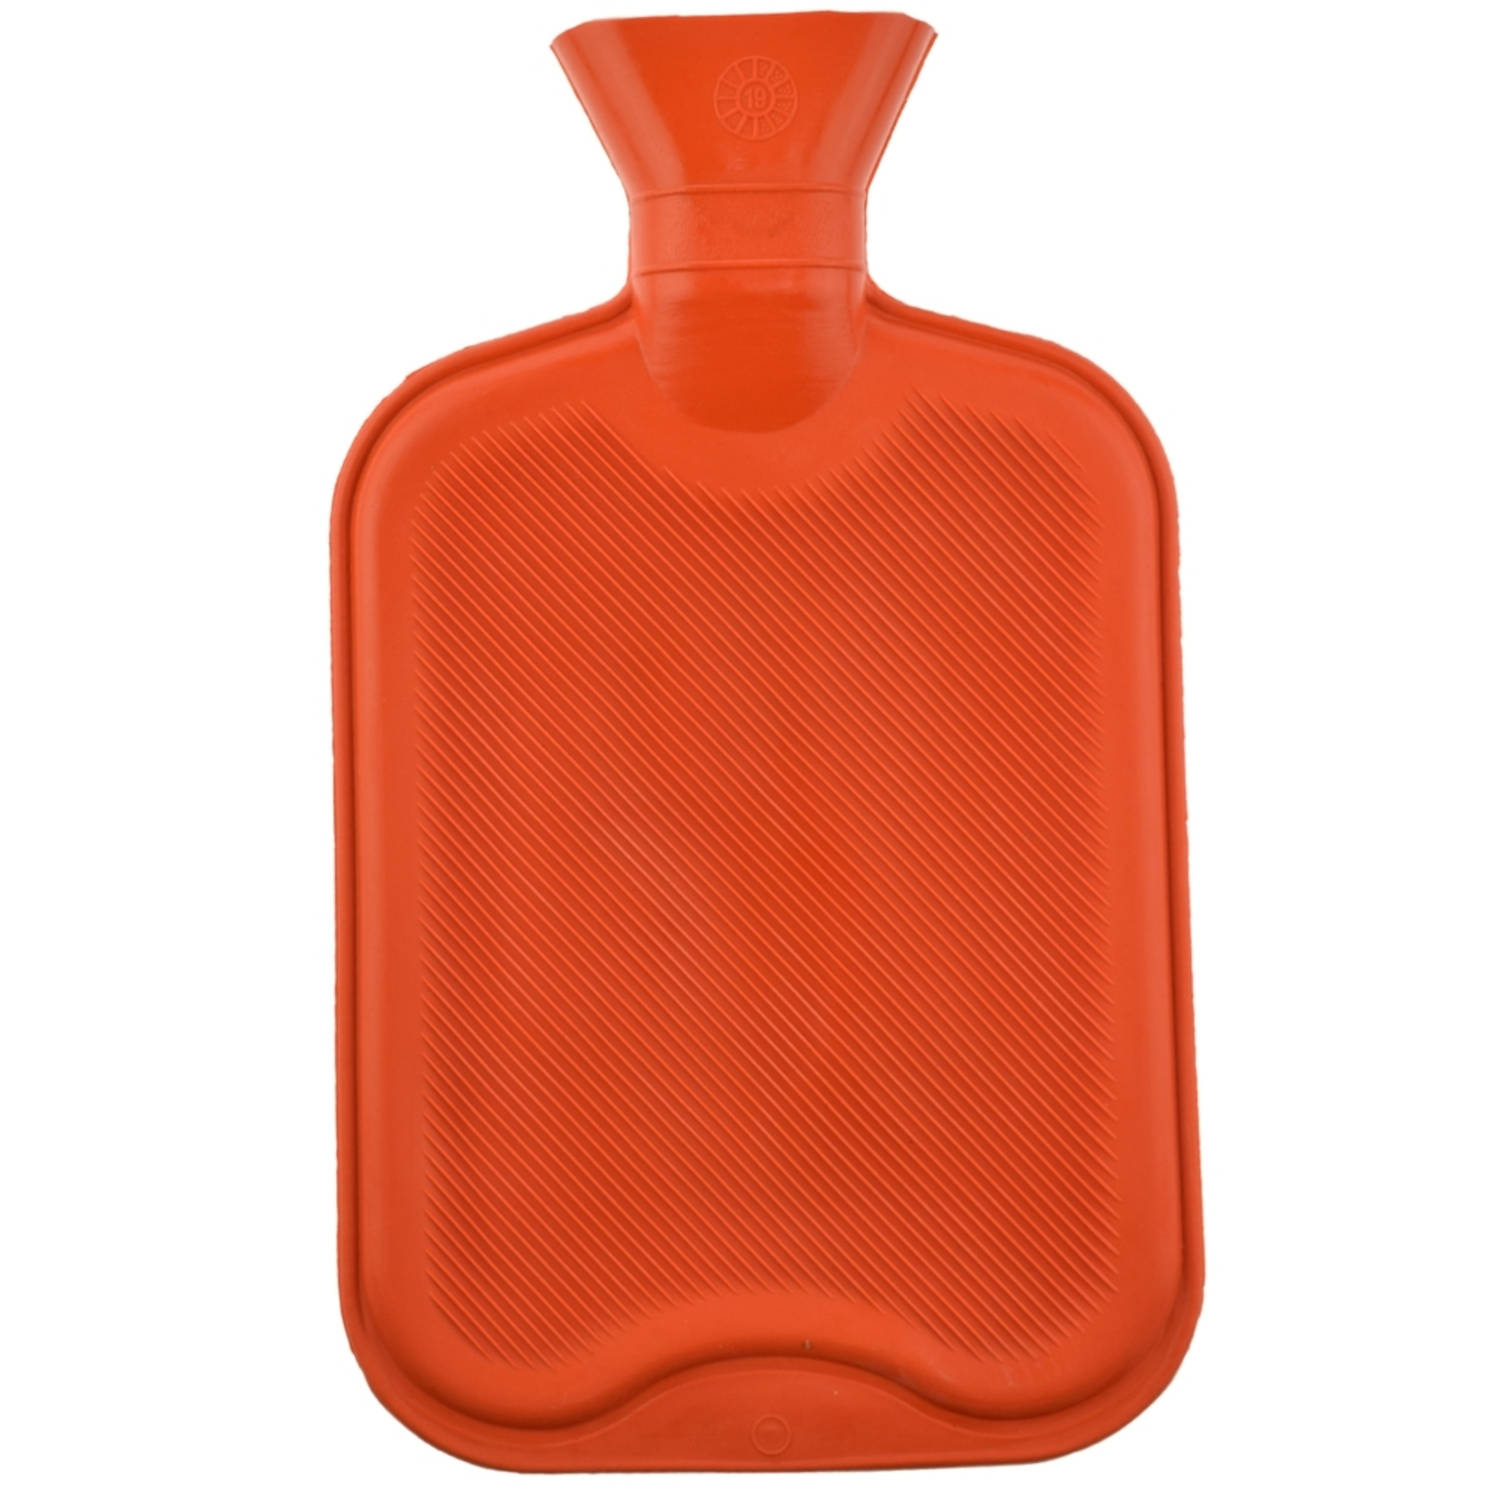 Bedenken Minder dan wanhoop Orange85 Warmwaterkruik - Kruik - Zak - Rood - 2 Liter - Rubber - Unisex -  Warmwaterzak - Warmtekruik - Bedkruik | Blokker